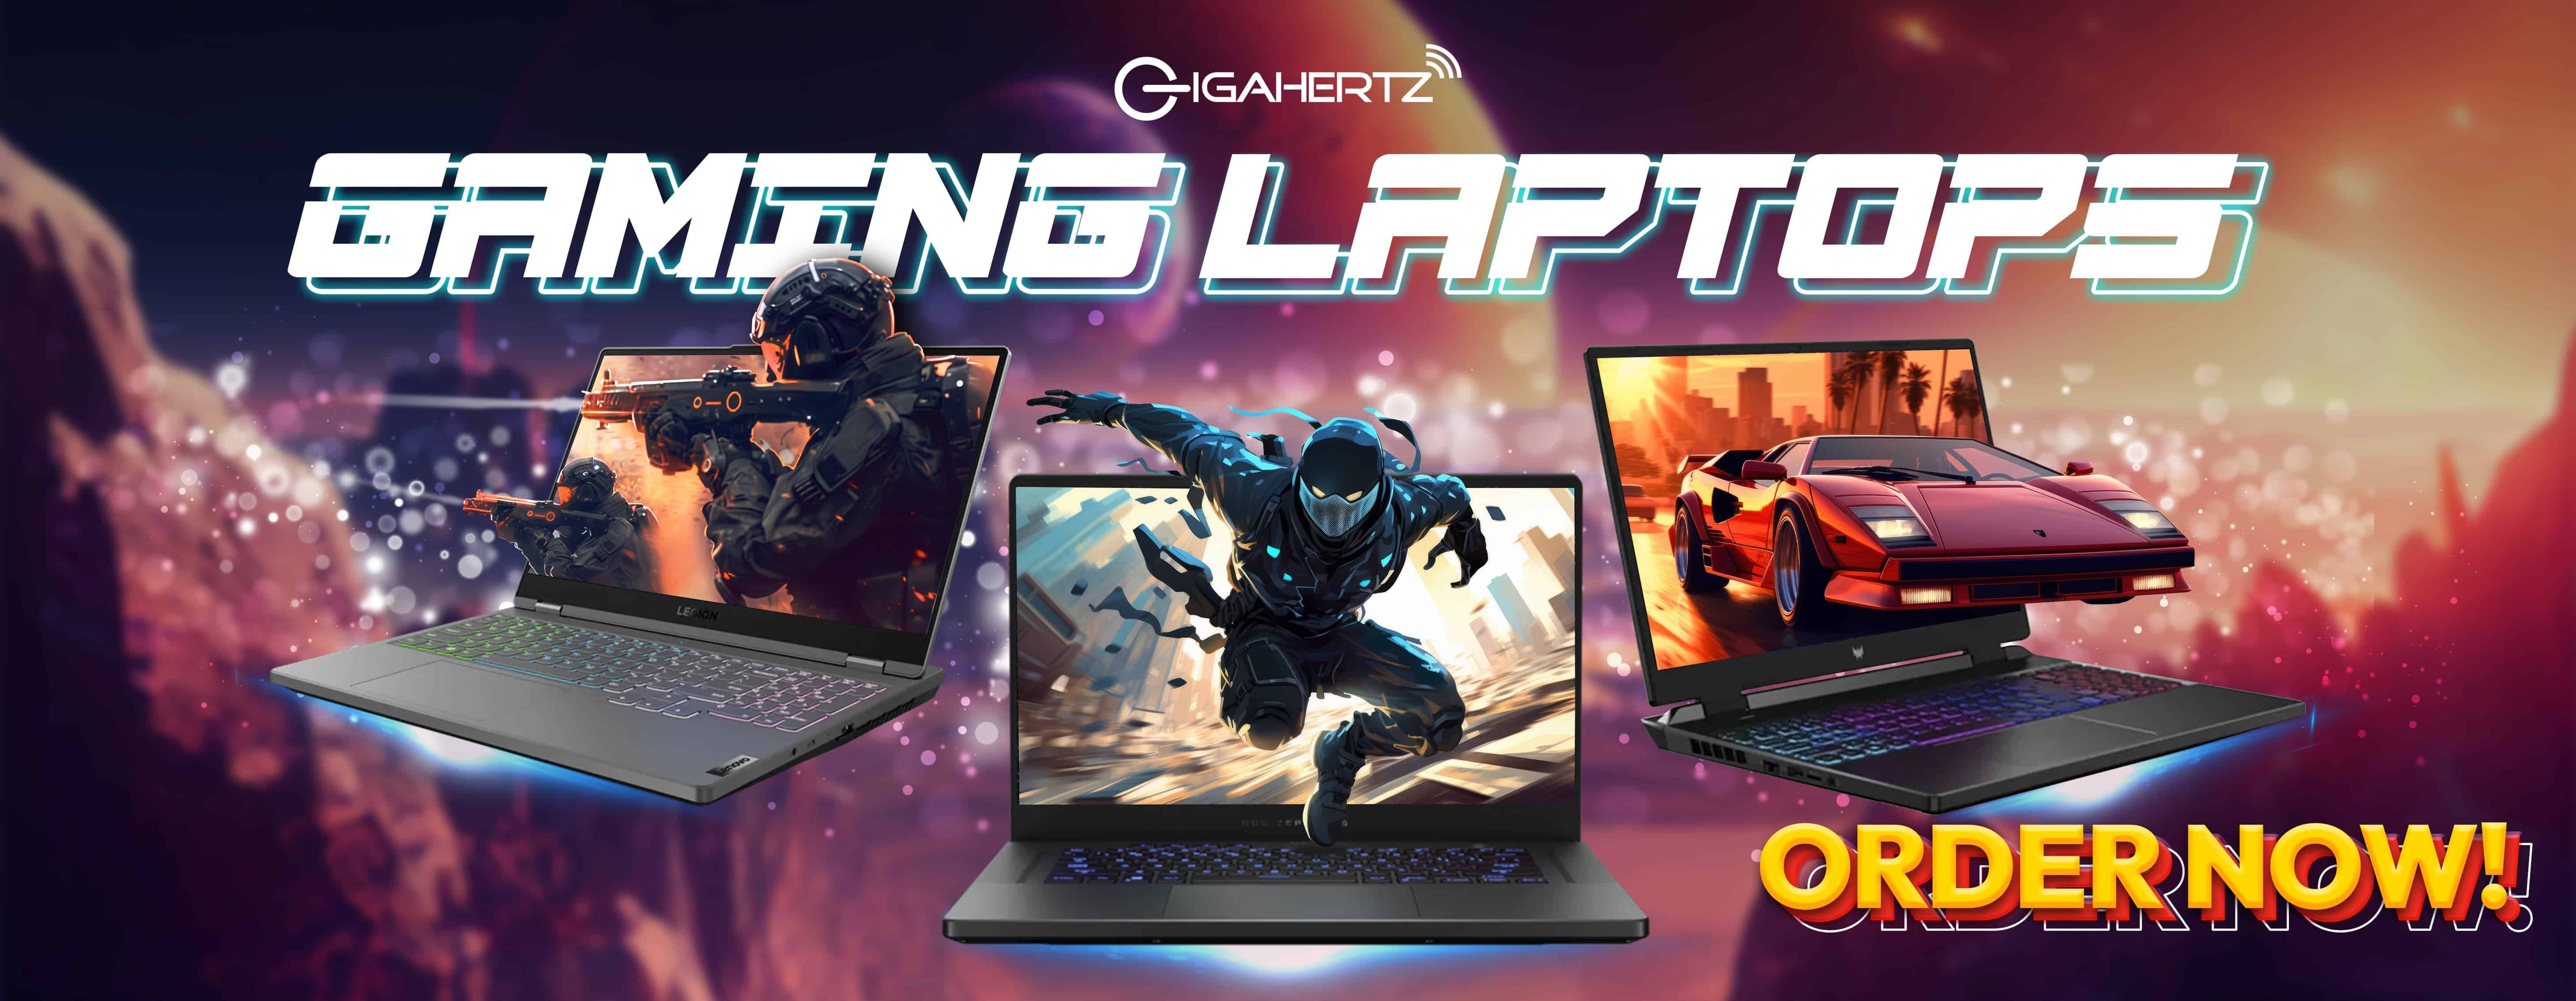 gigahertz | best gaming laptops, affordable gaming laptops, top gaming laptops, latest gaming laptops, gaming laptops online